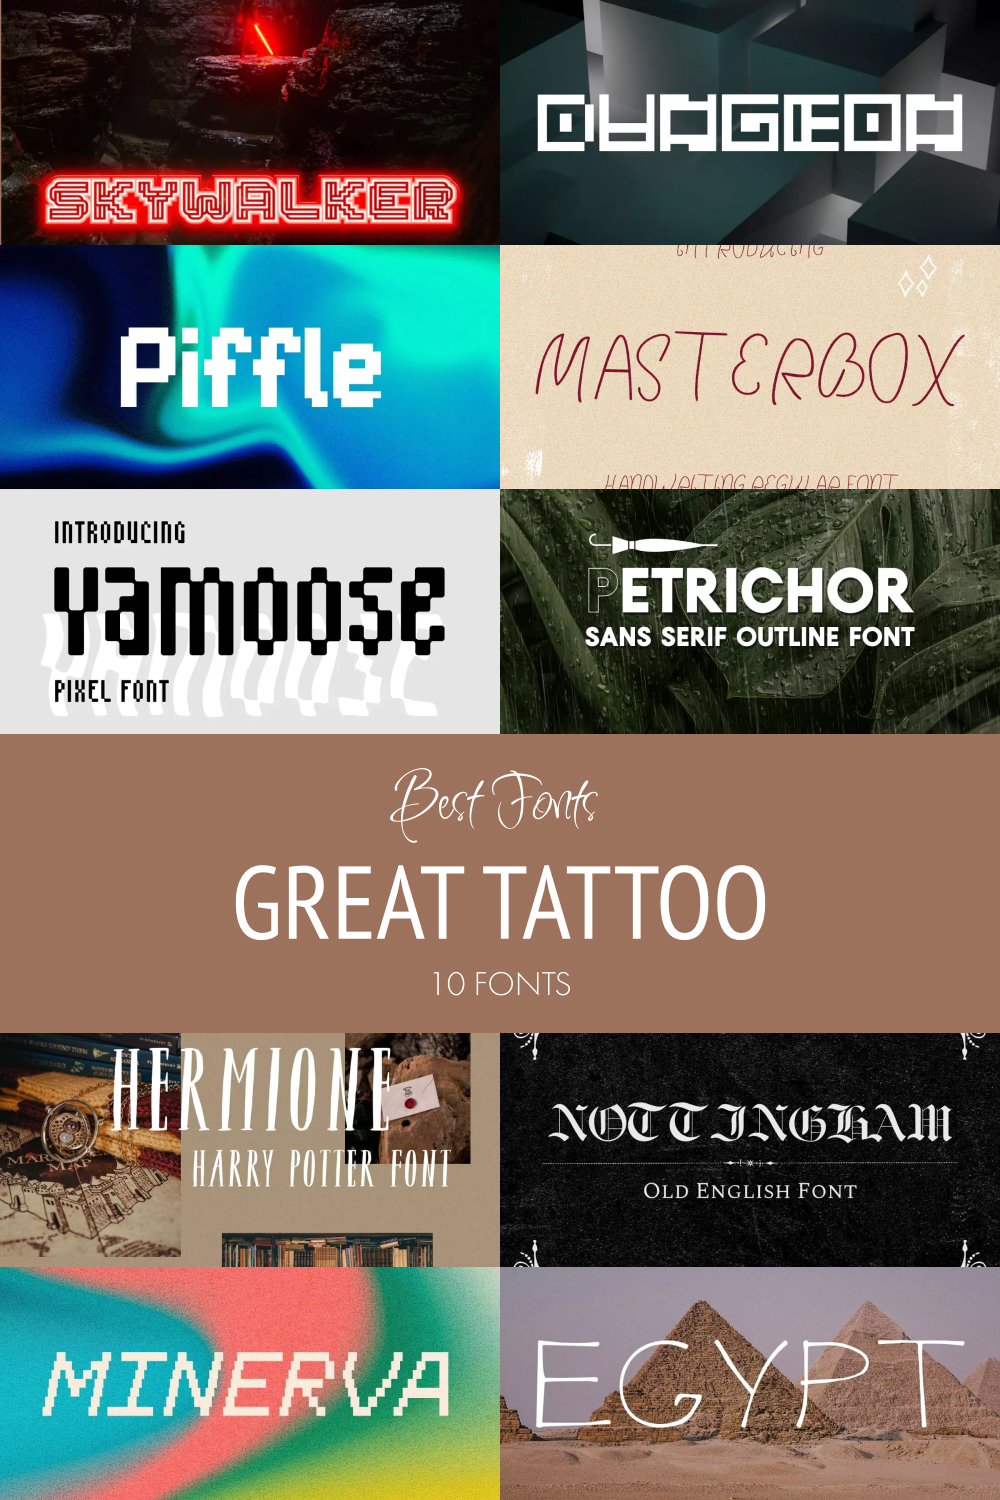 Great tattoo fonts bundle 10 fonts of pinterest.